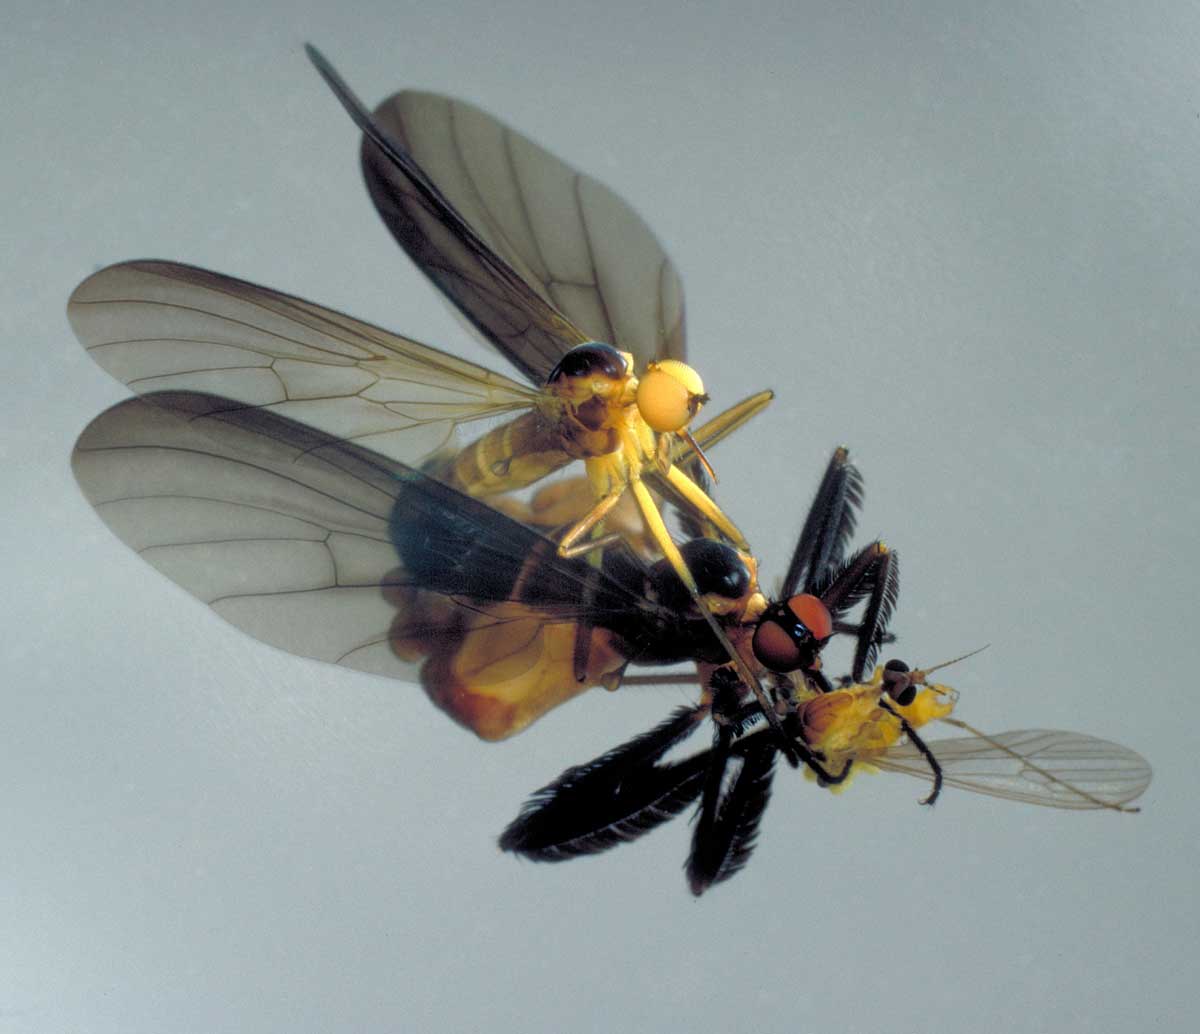 Rhamphomyia longicauda in copula